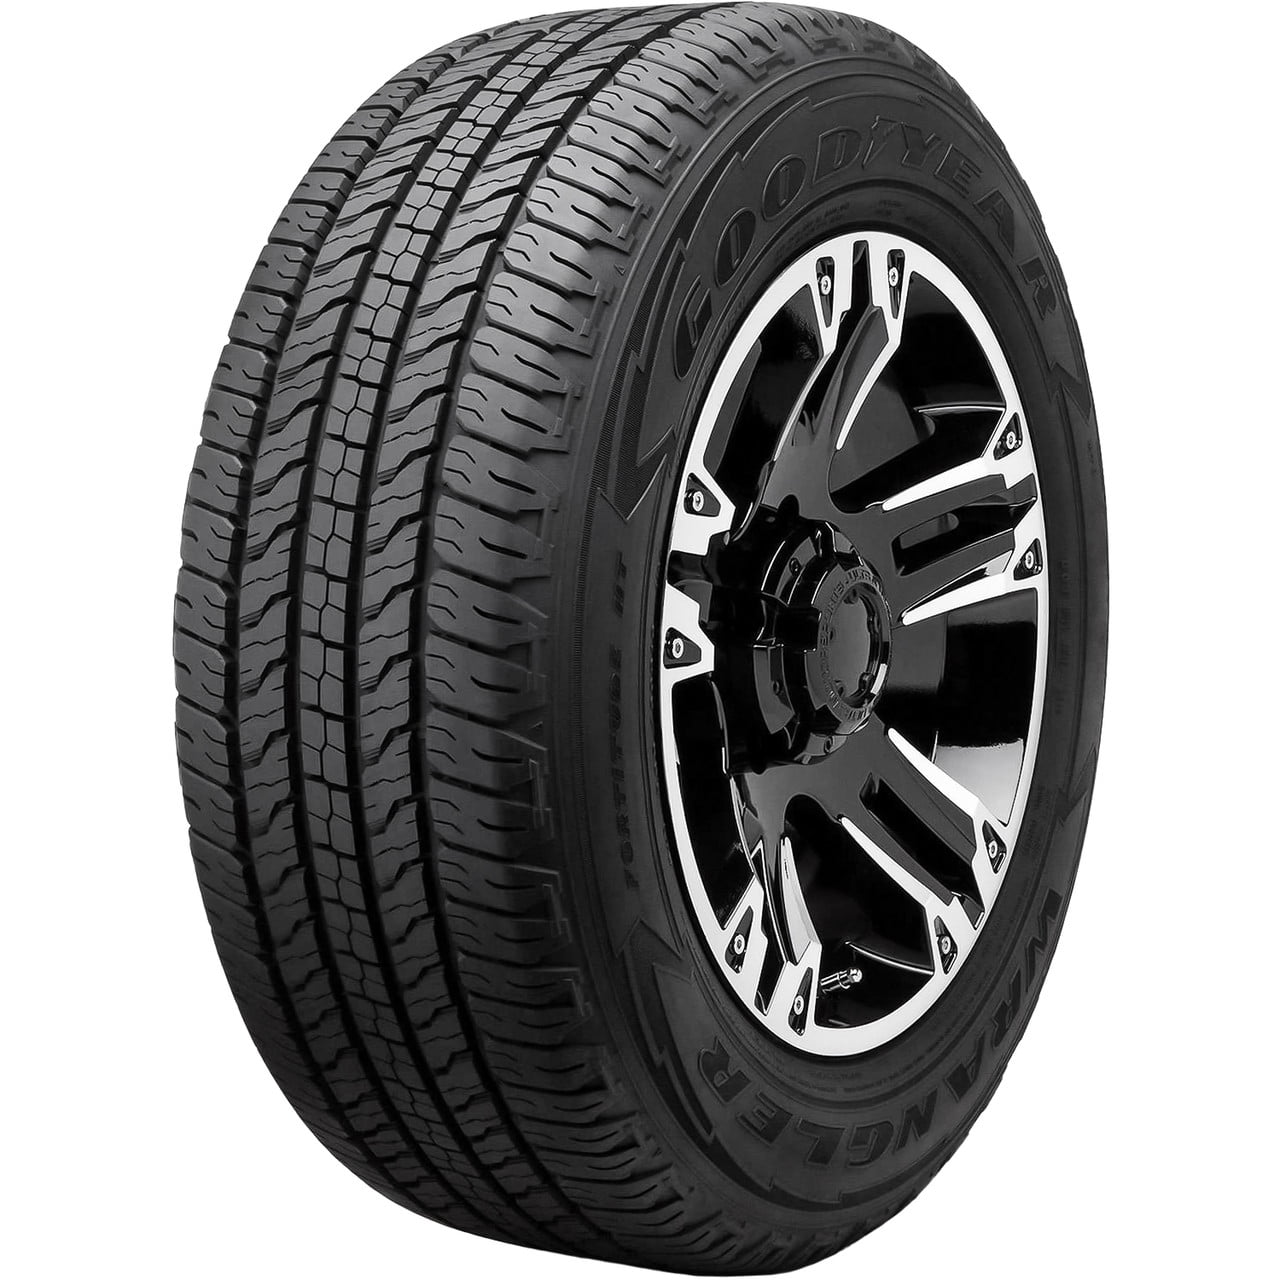 4 New Goodyear Wrangler Fortitude HT All-Season Tires - 235/75R17 109T -  